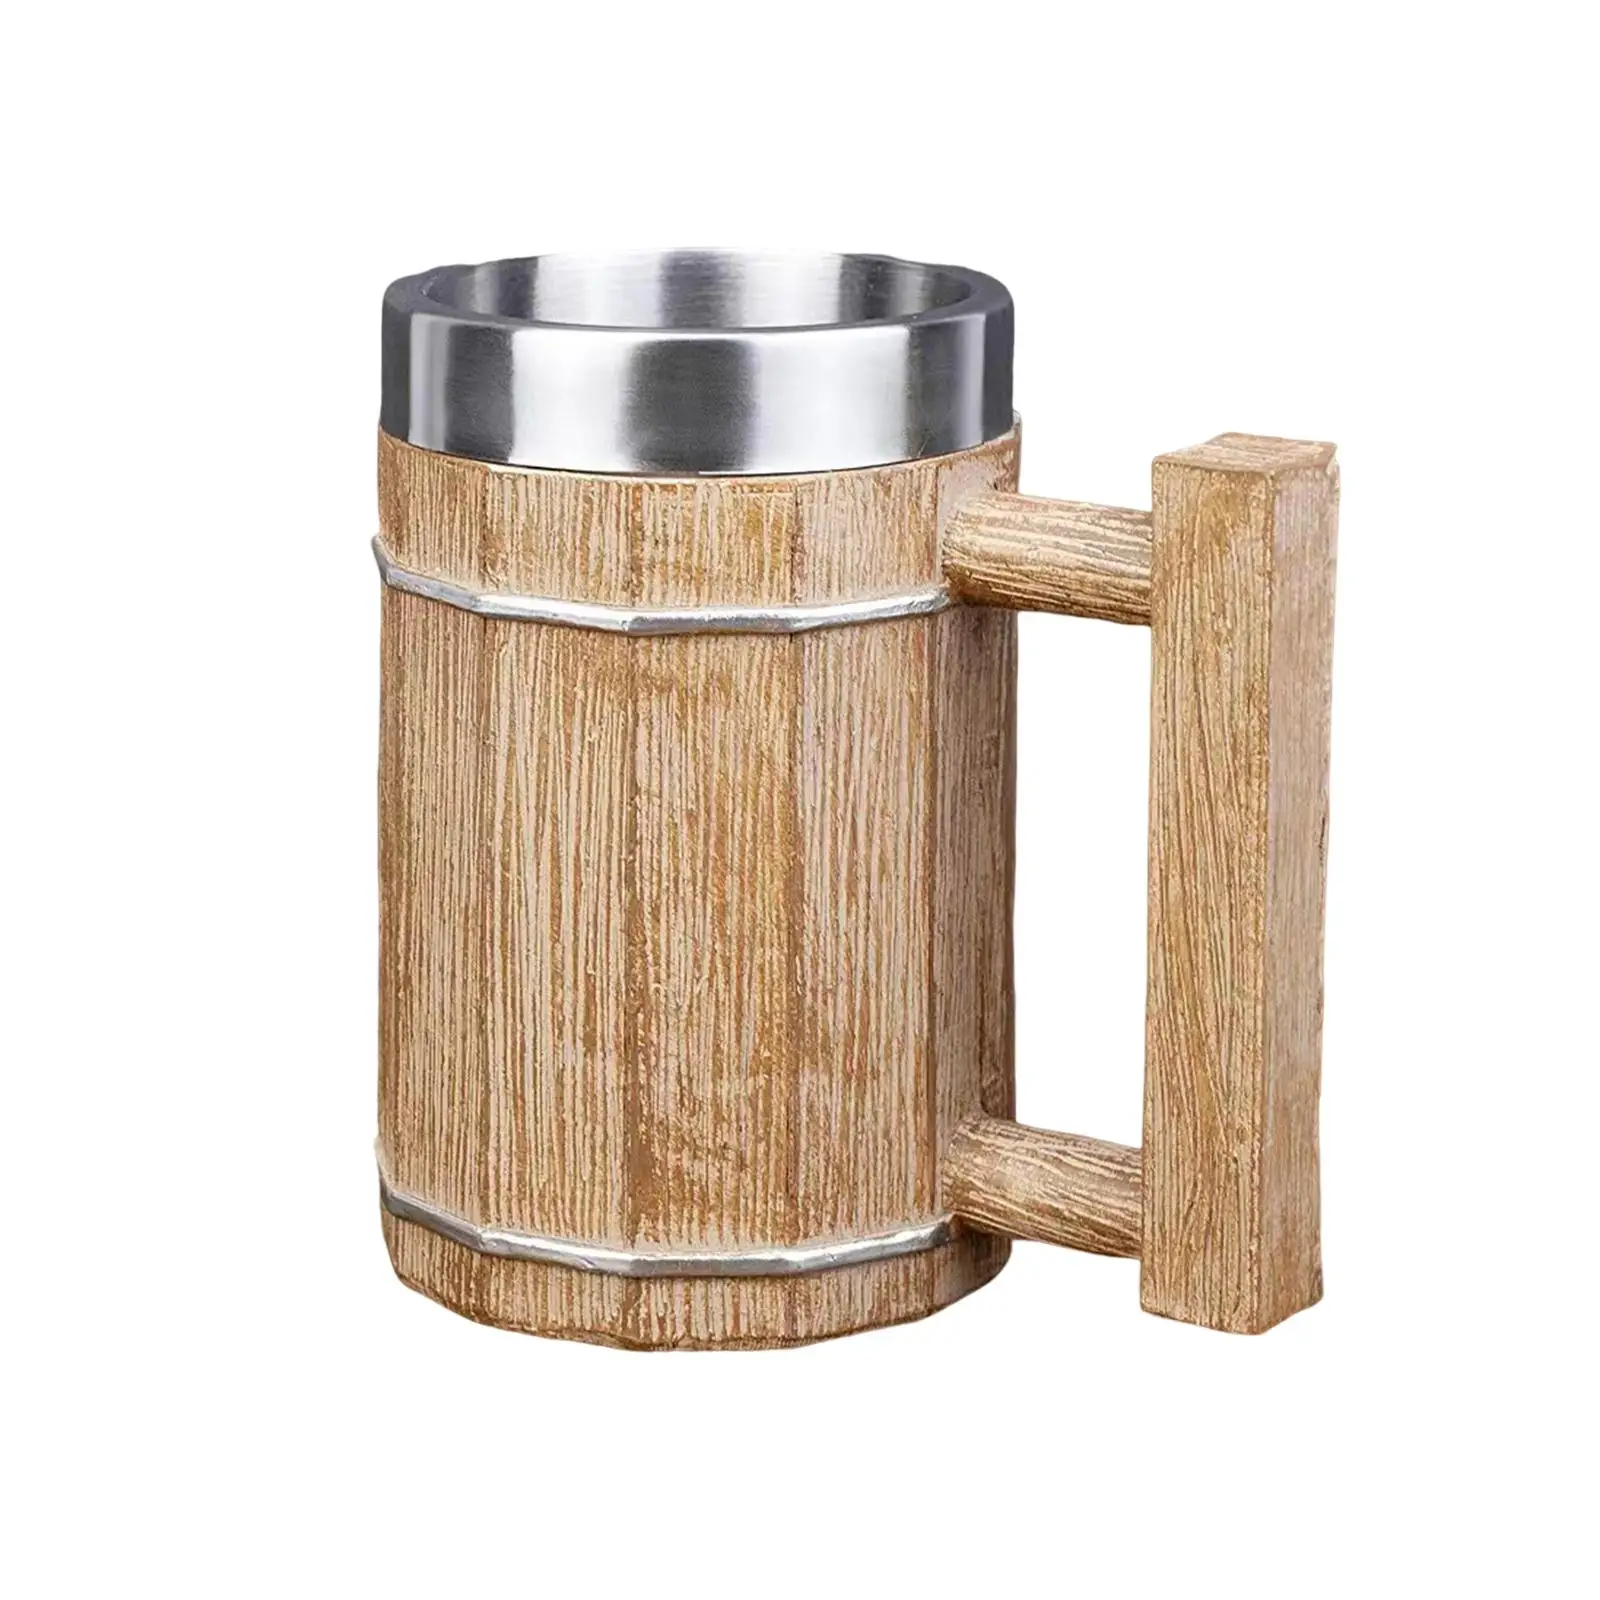 Barrel Beer Mug 600ml Bucket Shaped Drinkware Retro Centerpiece Novelty Gift Portable Tea Cup for Home Parties Bar Camping Dorm